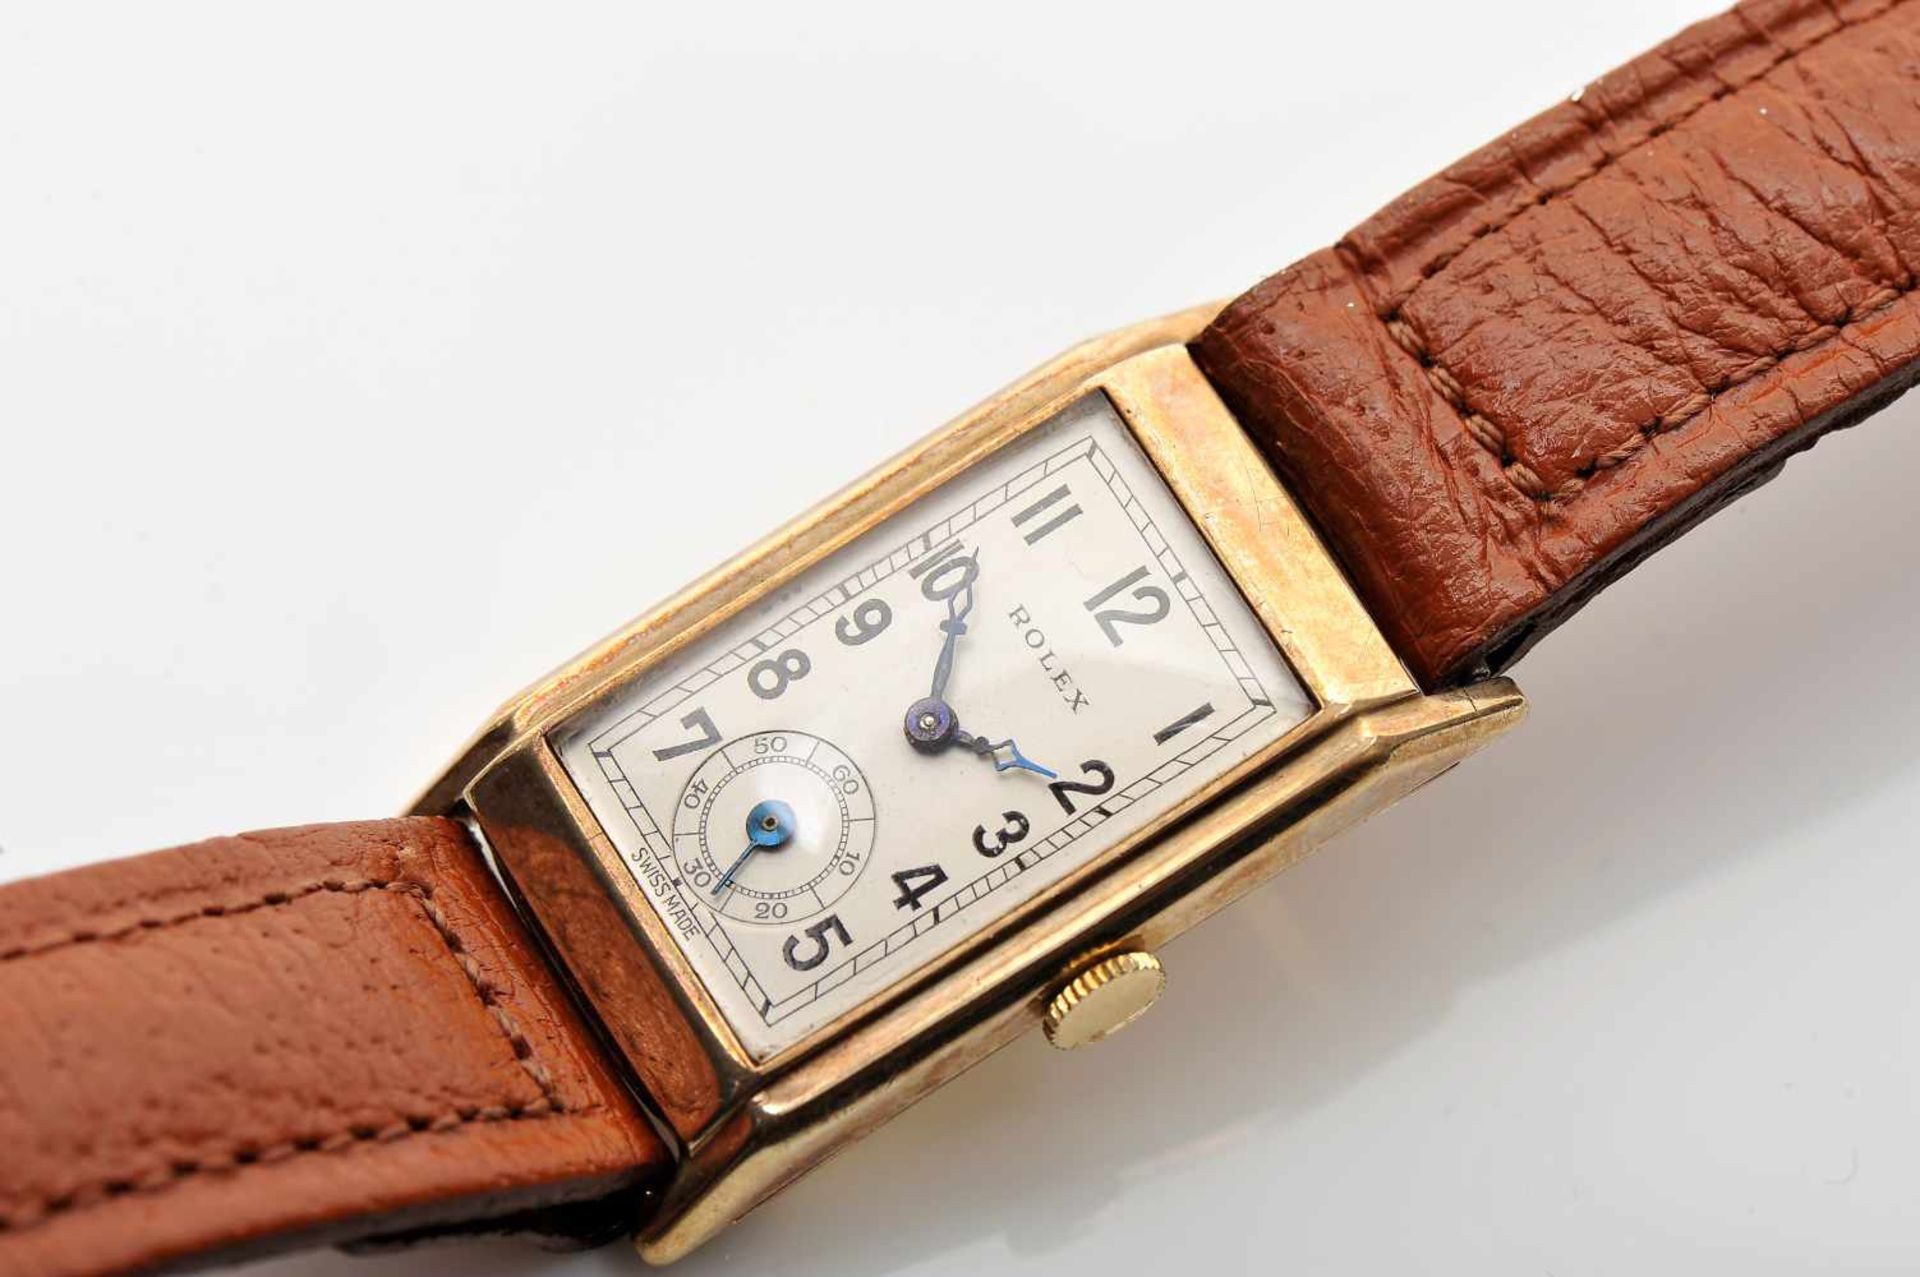 A ROLEX wristwatch, MODEL PRINCE TONNEAU